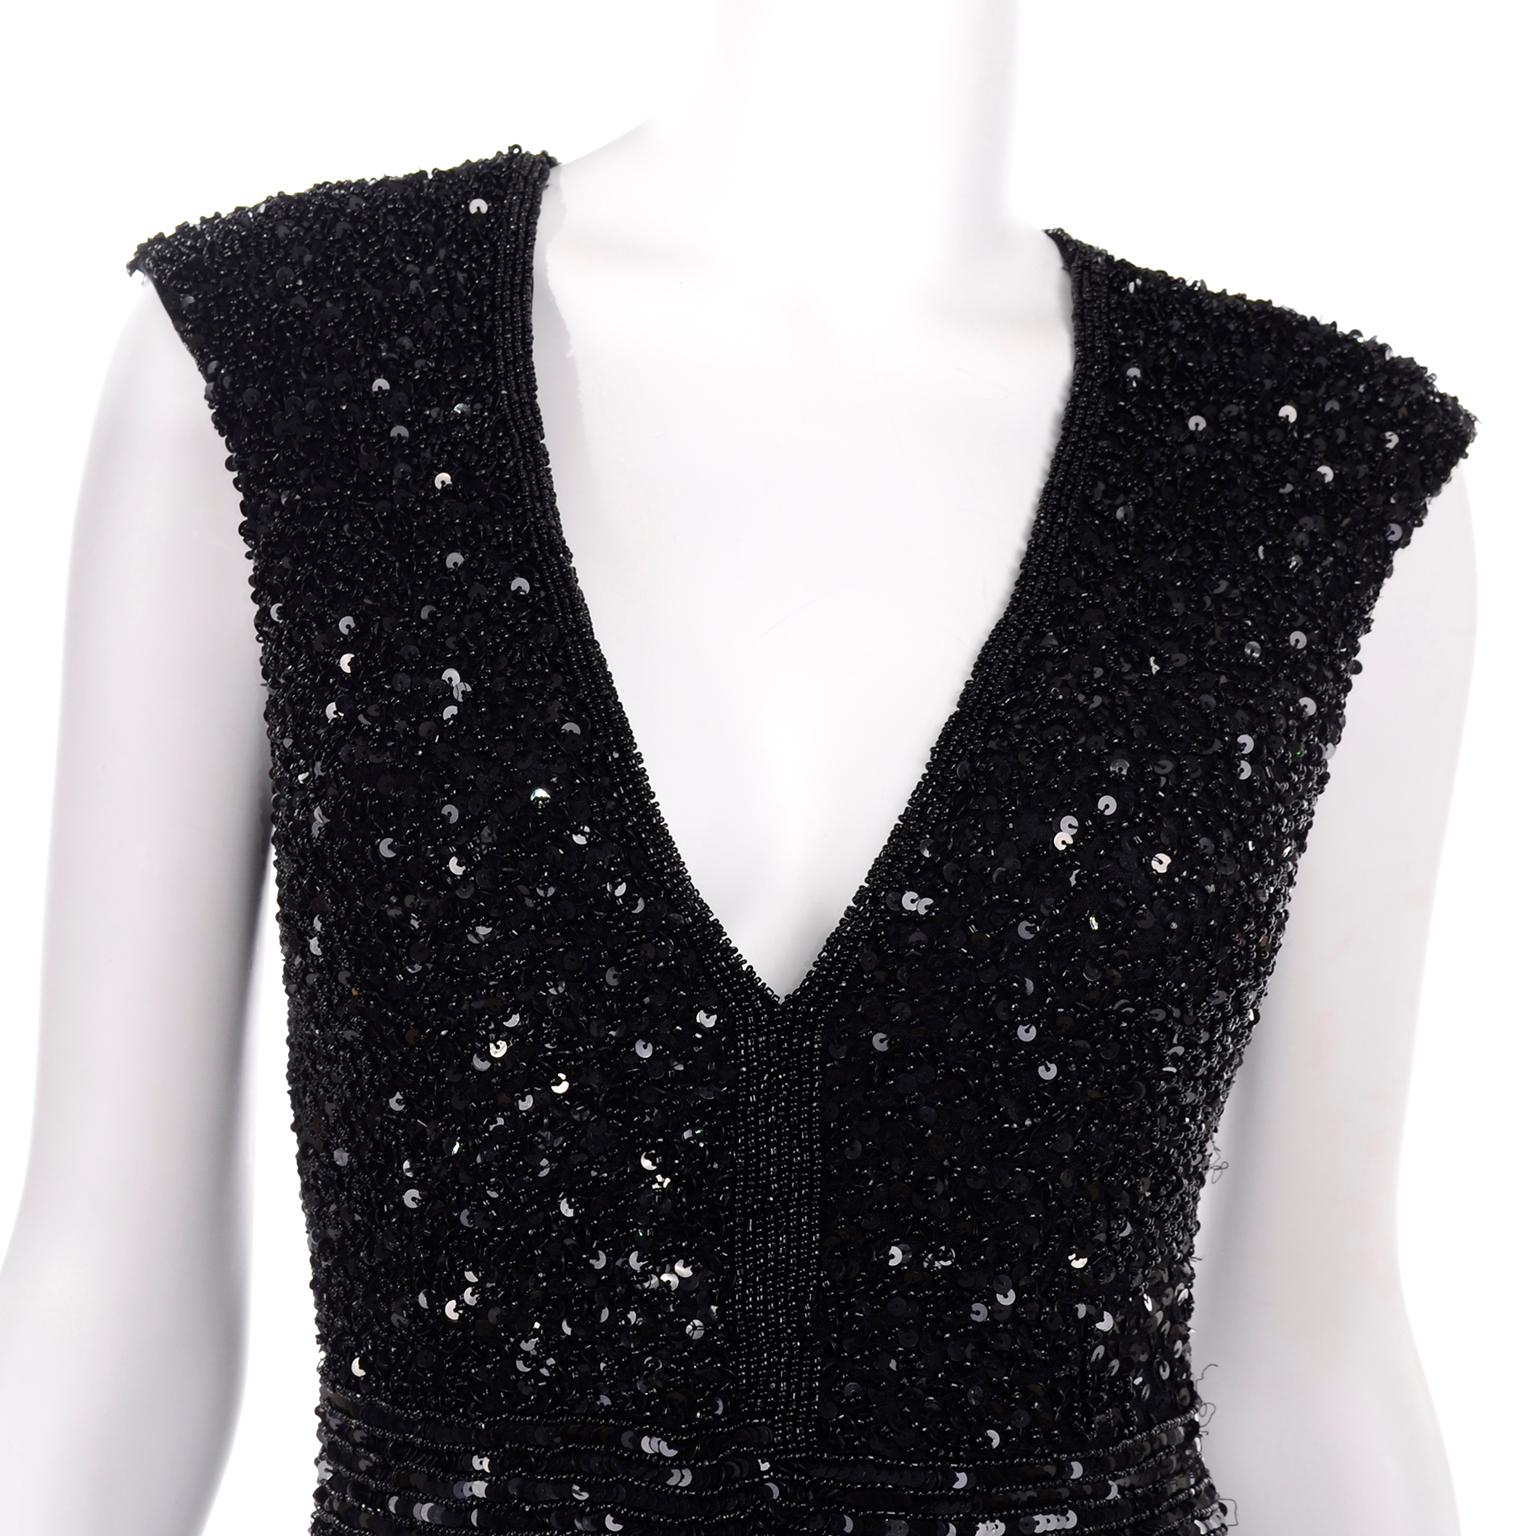 Heavily Beaded Vintage Black Jumpsuit Evening Dress Alternative For Sale 3